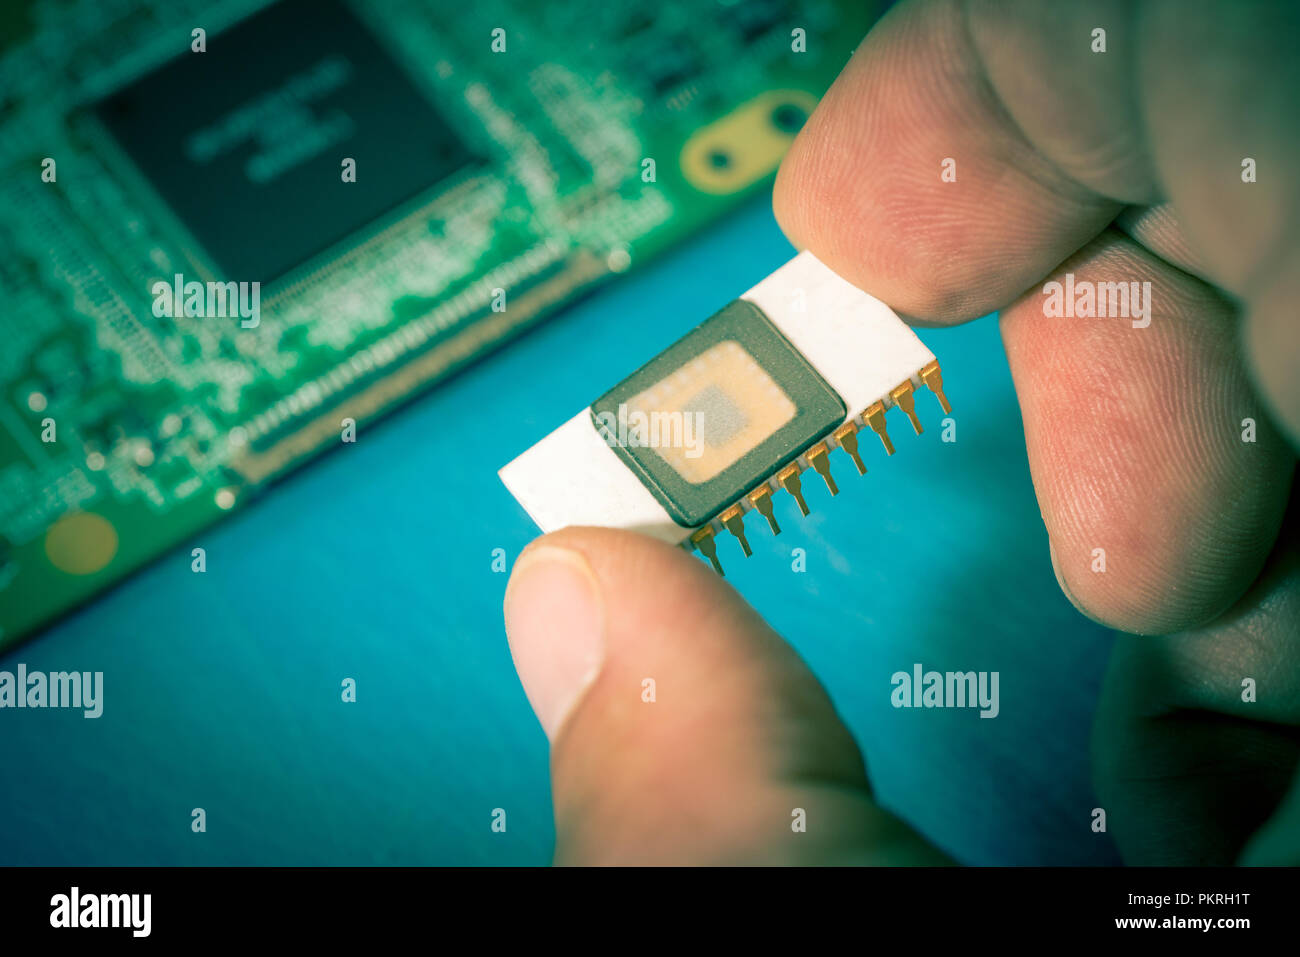 Silicon ceramic chip in the hand Stock Photo